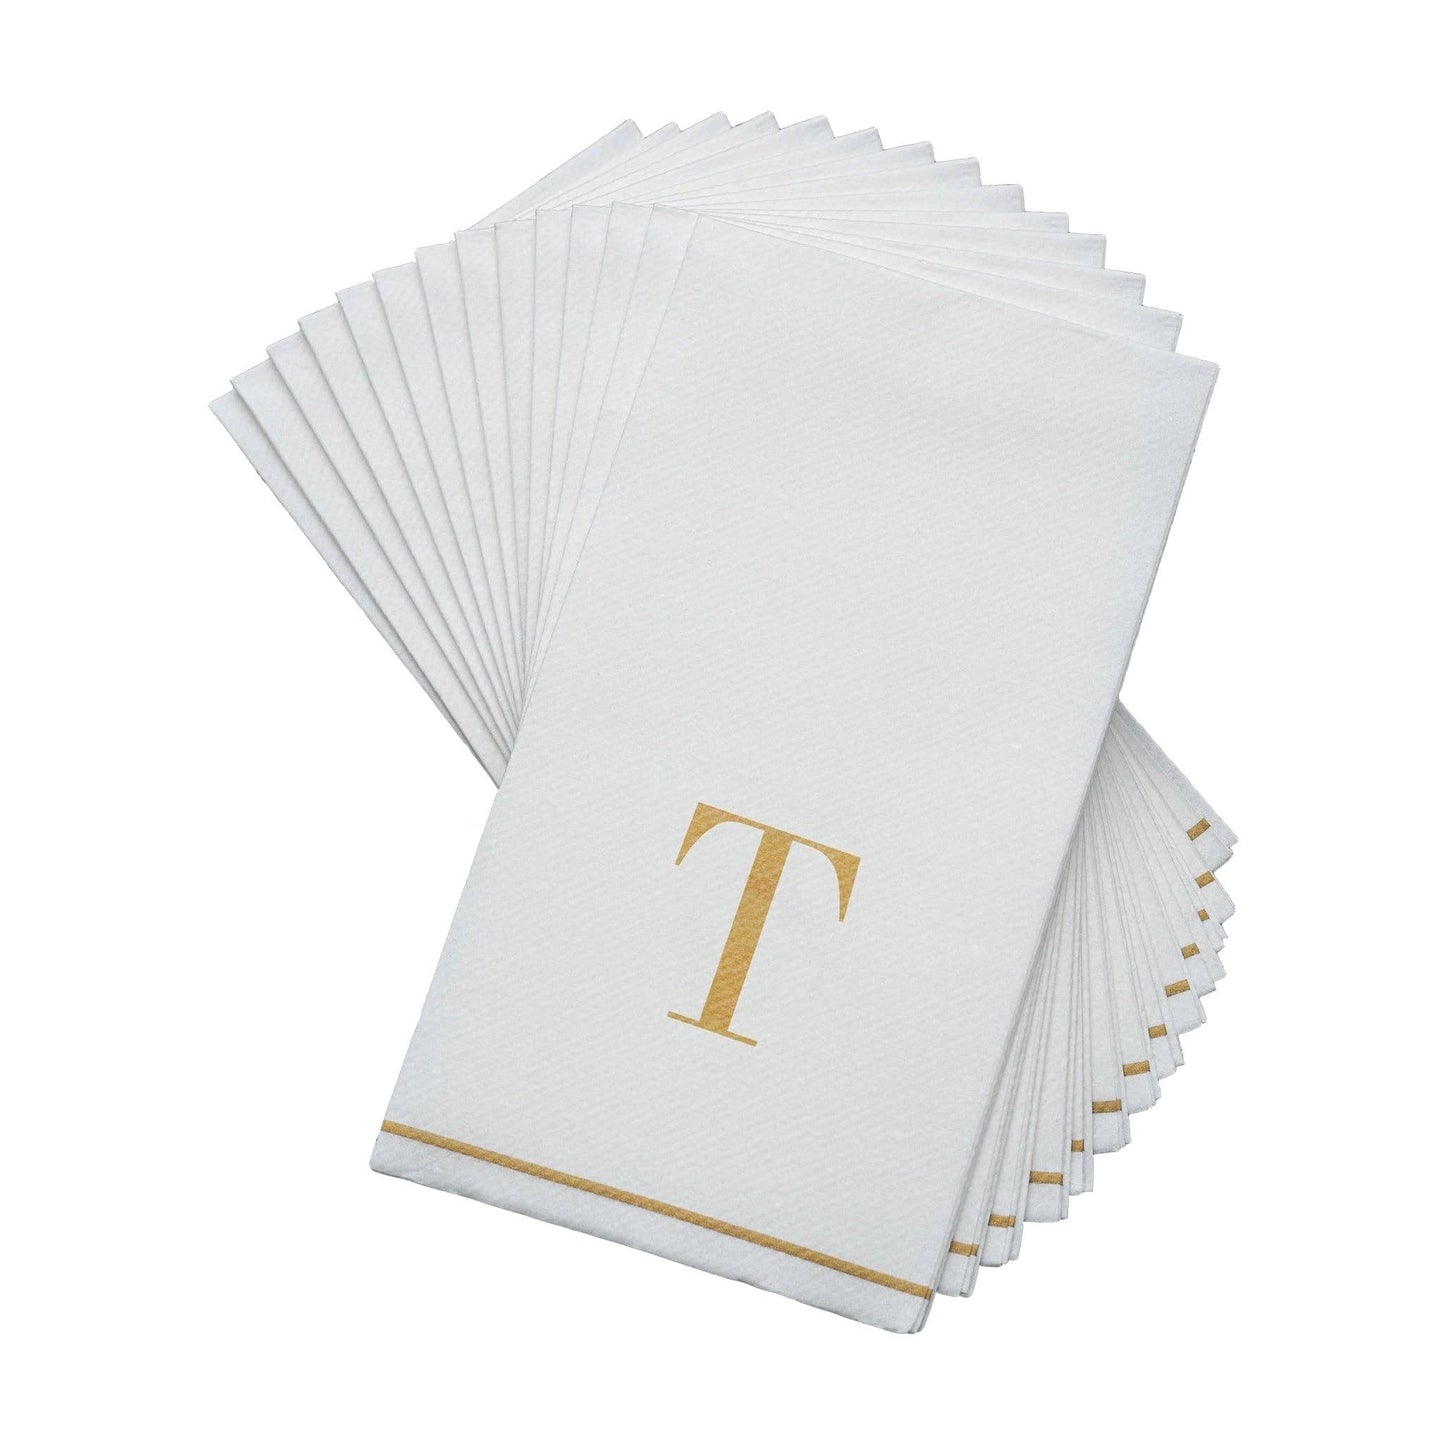 T Gold Monogram Paper Disposable Dinner Napkins | 14 Napkins: 14 Guest Napkins - 4.25" x 7.75"